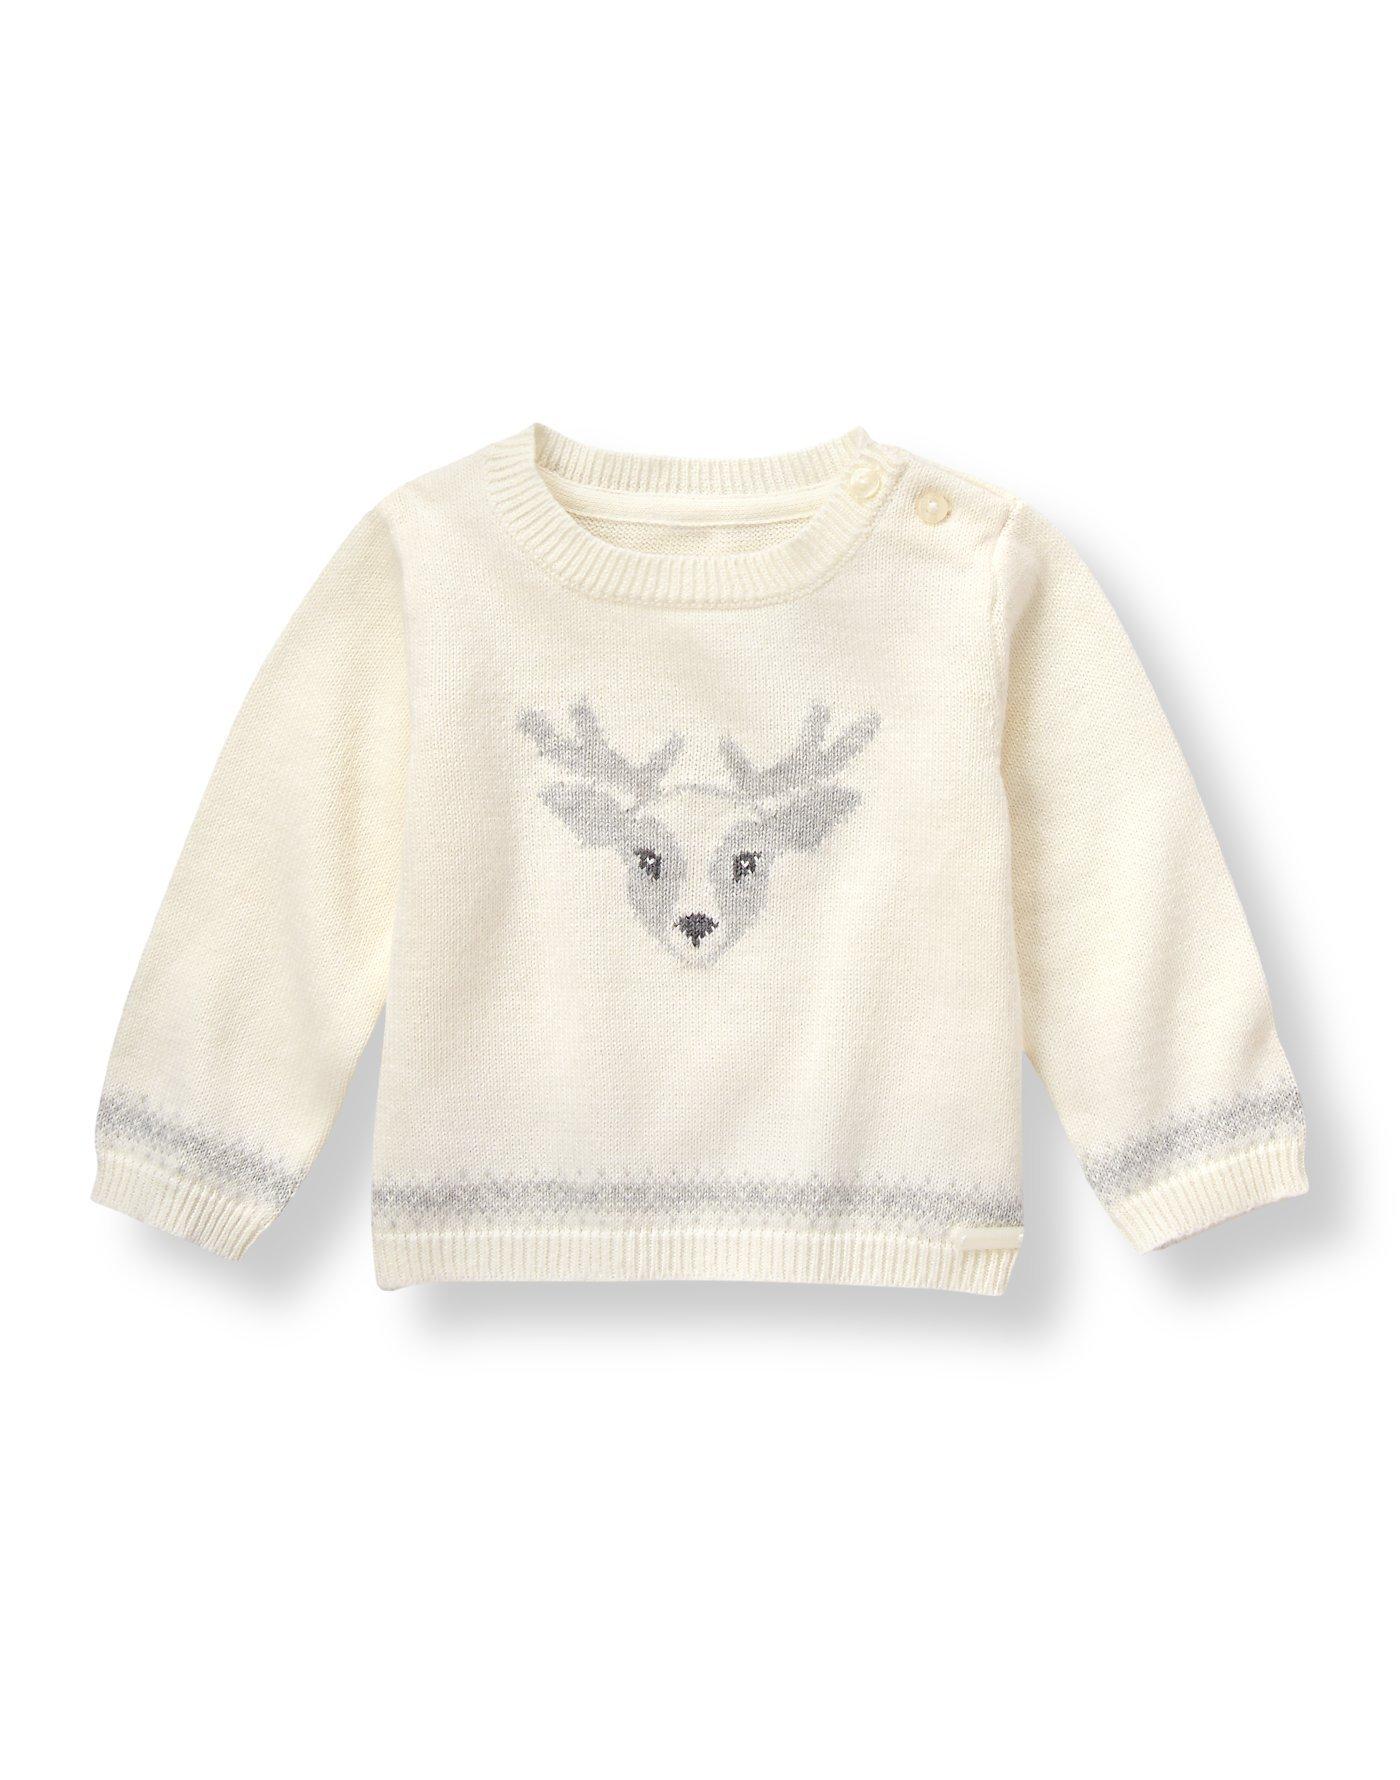 Reindeer Sweater image number 0